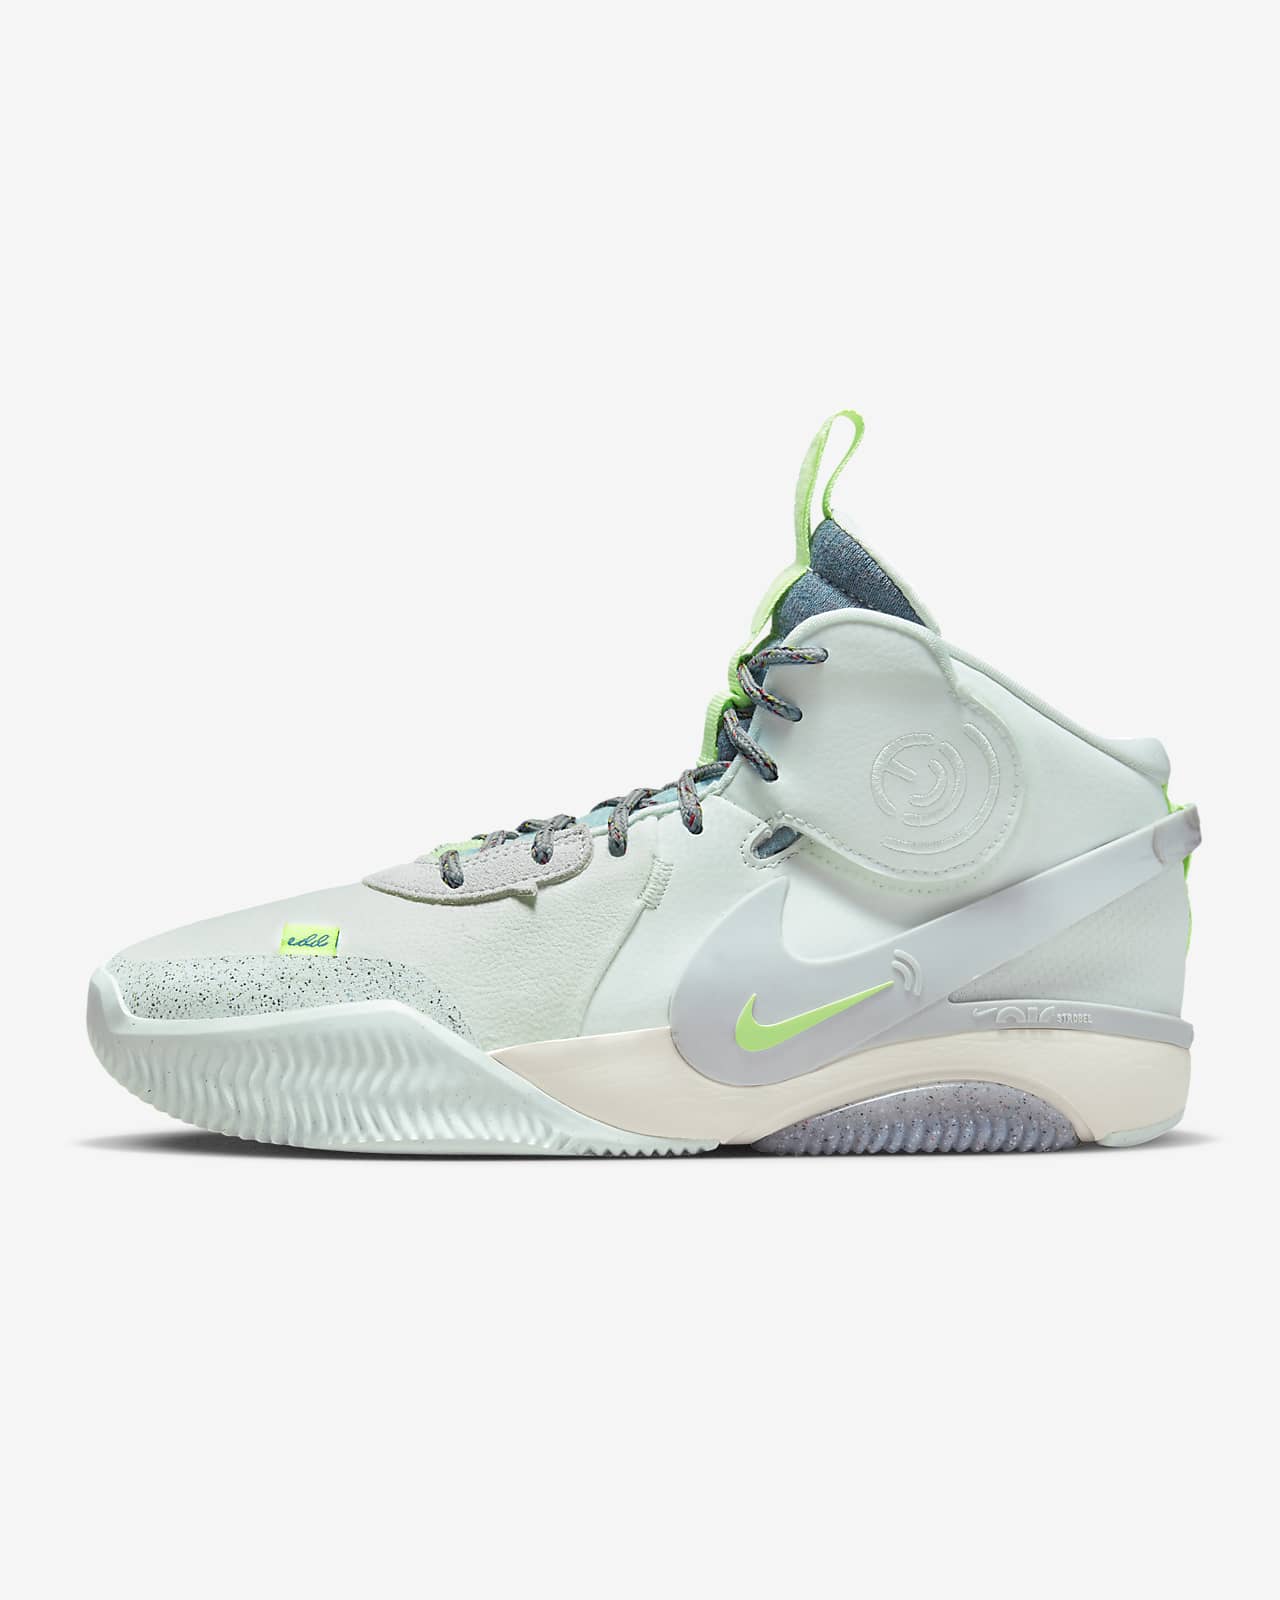 borracho lava malta Nike Air Deldon "Lyme" Easy On/Off Basketball Shoes. Nike.com